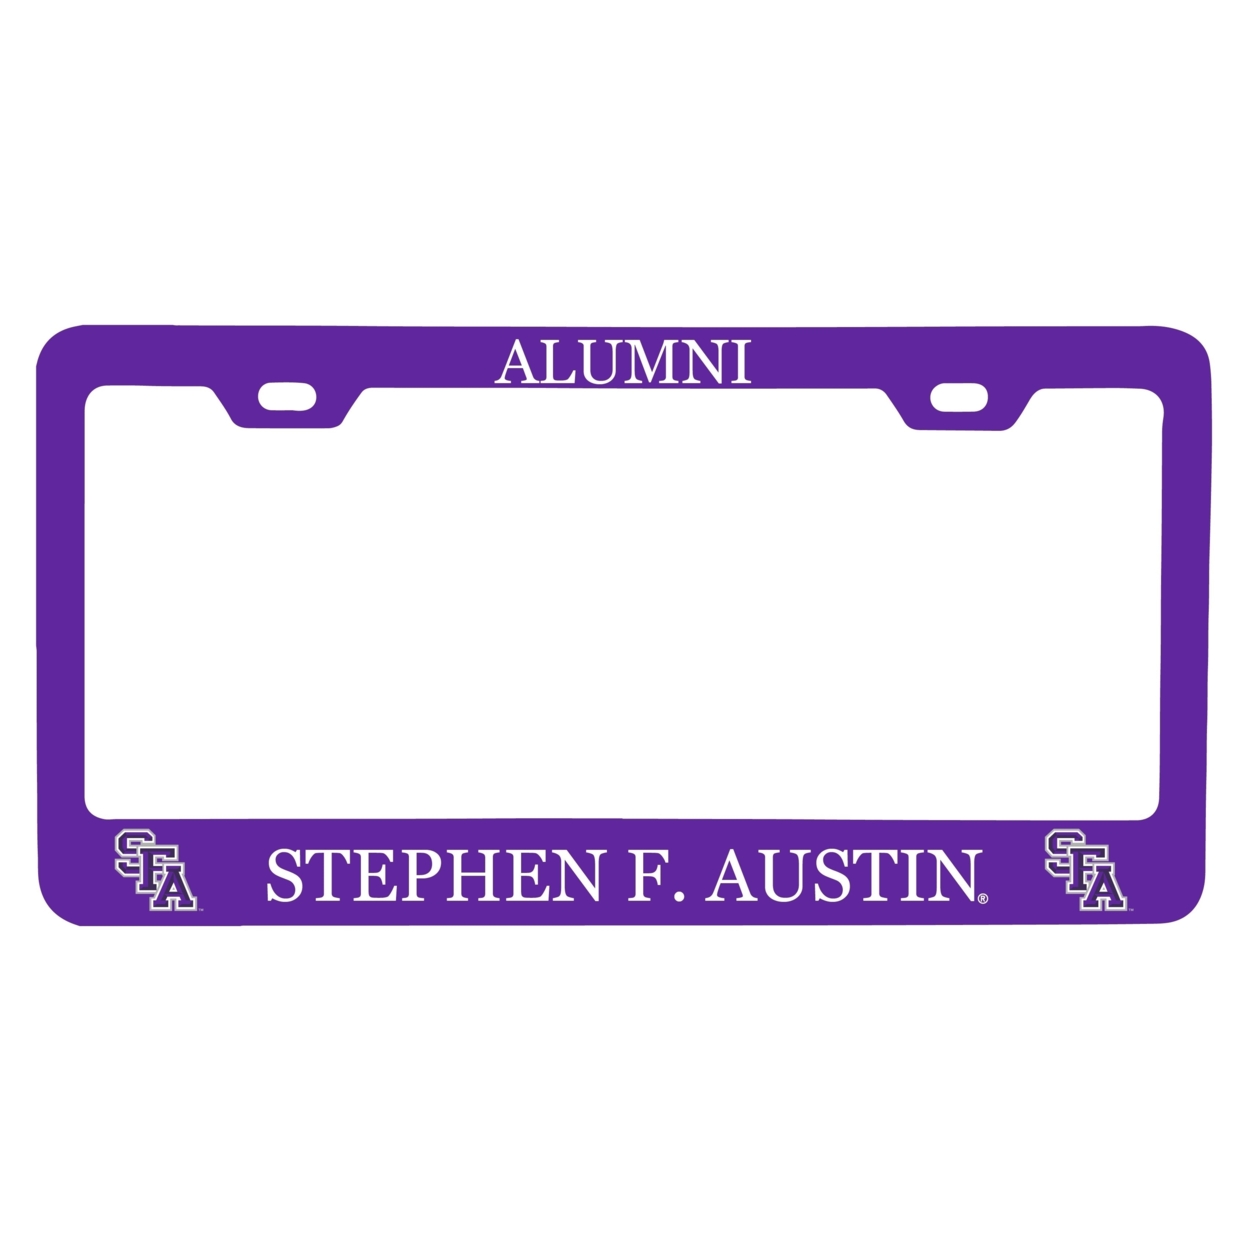 Stephen F. Austin State University Alumni License Plate Frame